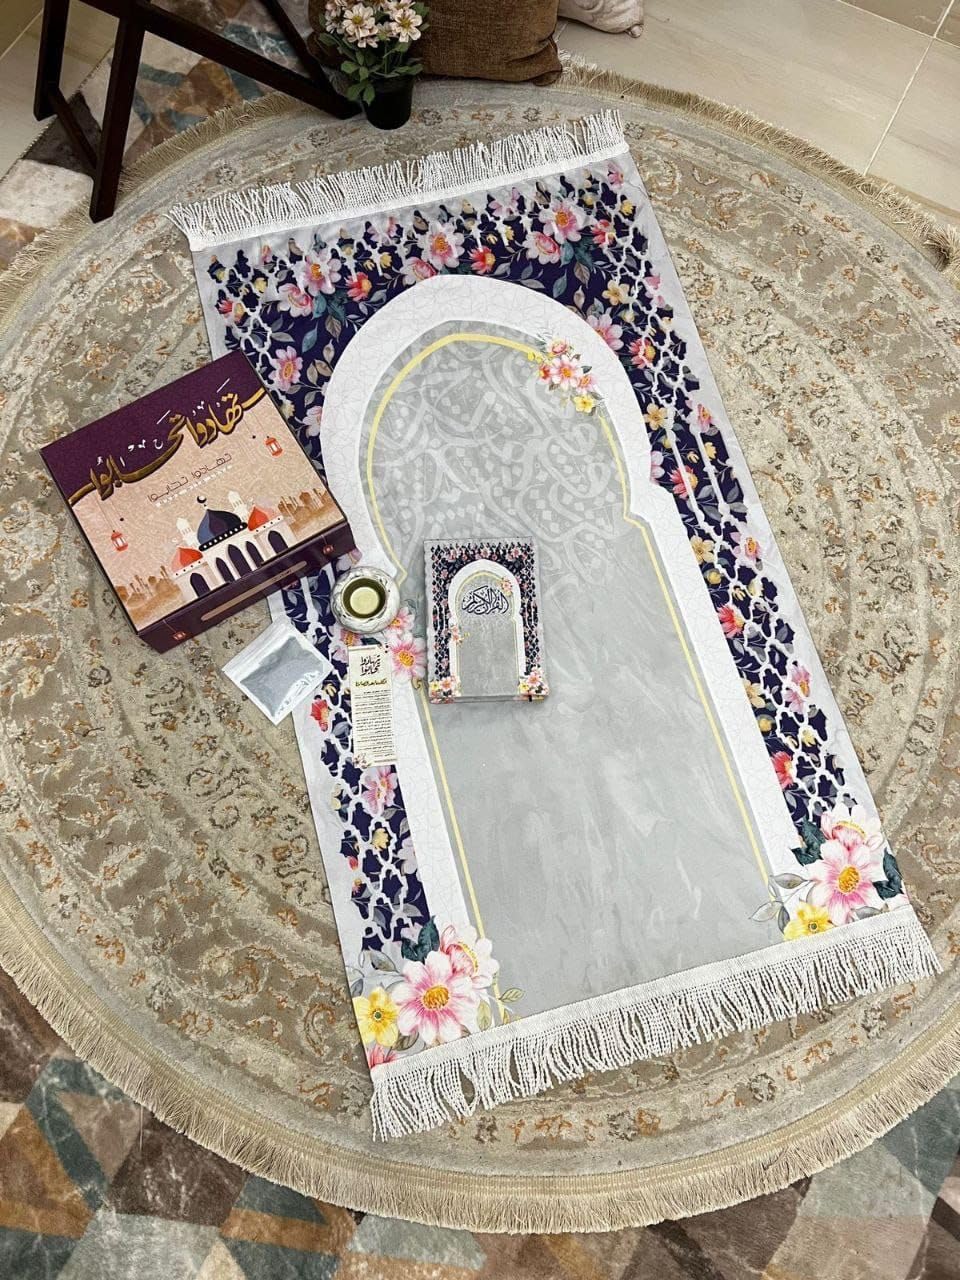 Ramadan box (velvet rug + Quran + marble incense burner + dhikr card “Quran break” + incense) Calm down and love the cleanest material (Grey color)